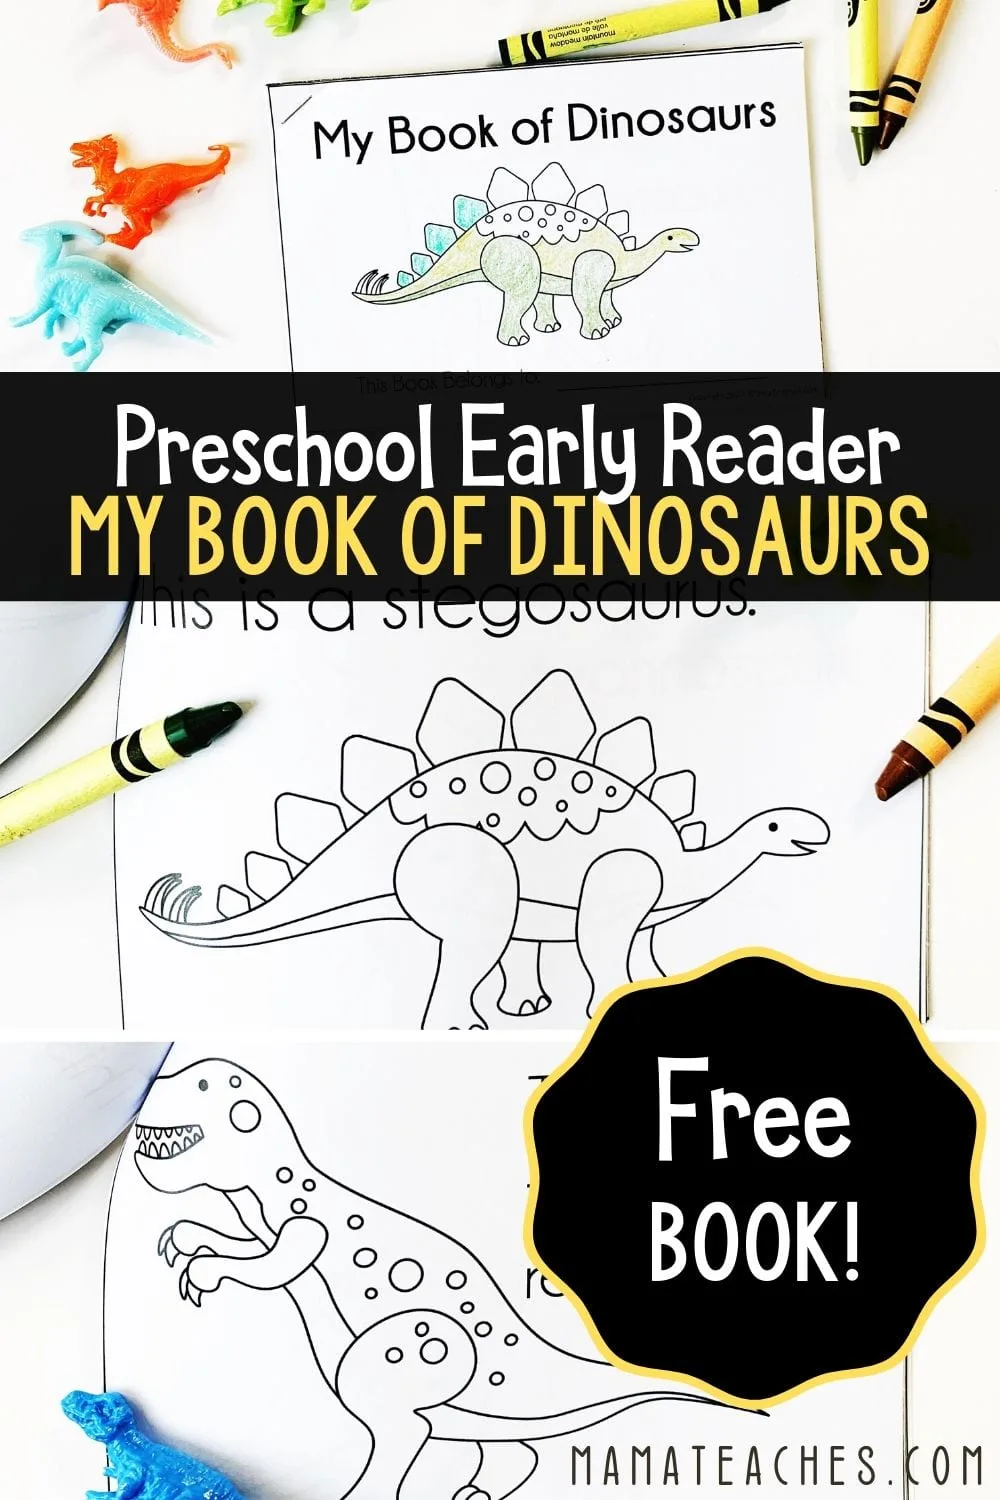 Free Preschool Early Reader - My Book of Dinosaurs - A Book of Dinosaurs for Preschoolers - MamaTeaches